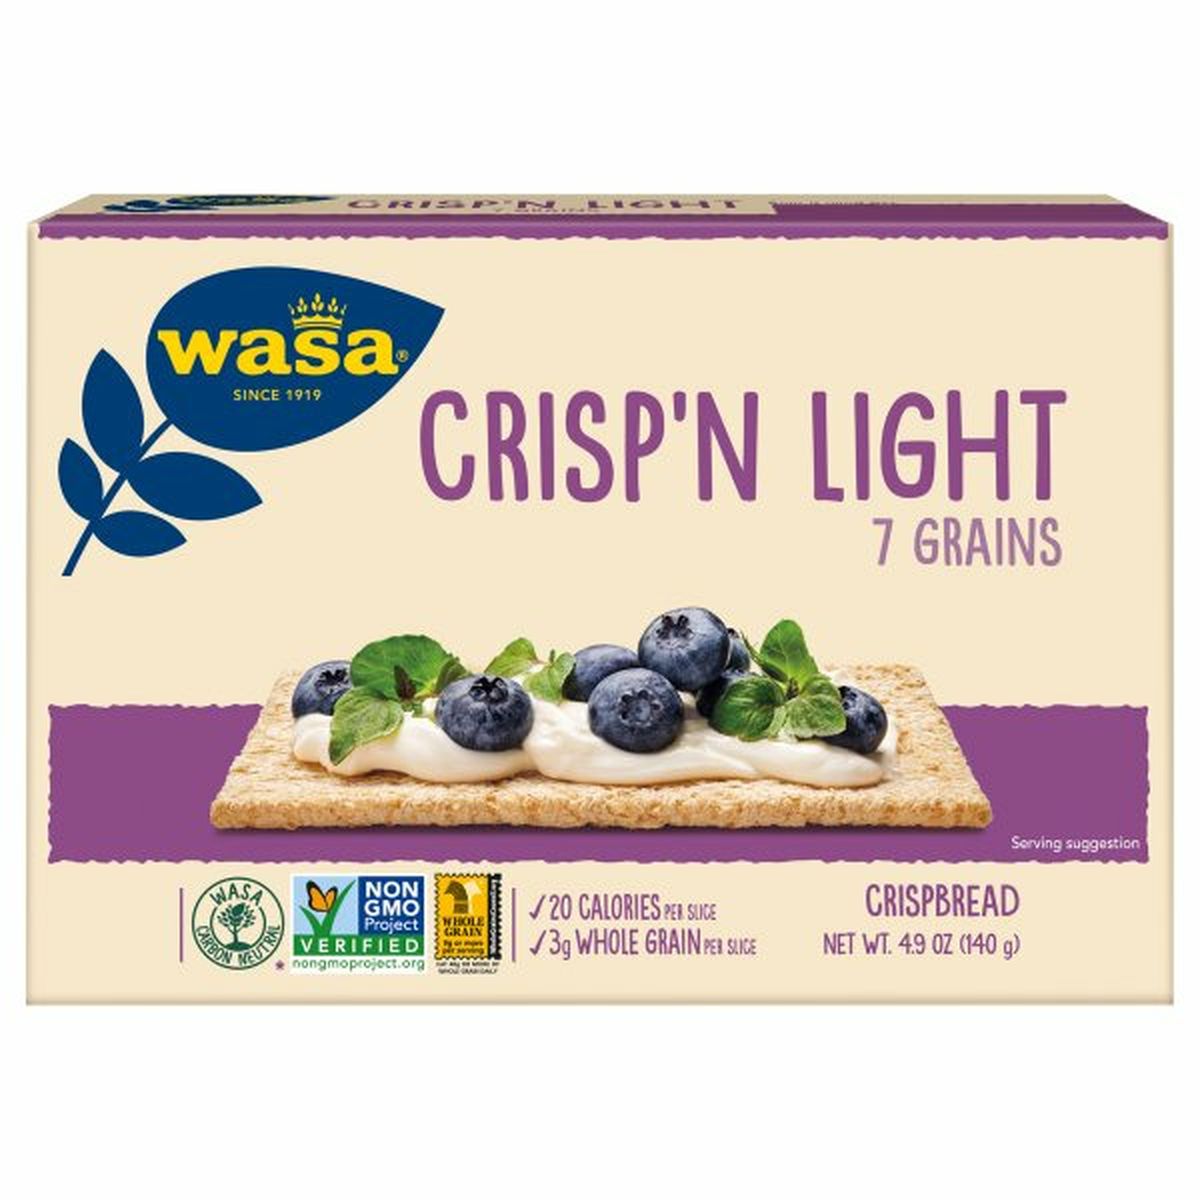 Calories in Wasa Crispbread, 7 Grains, Crispâ€™n Light